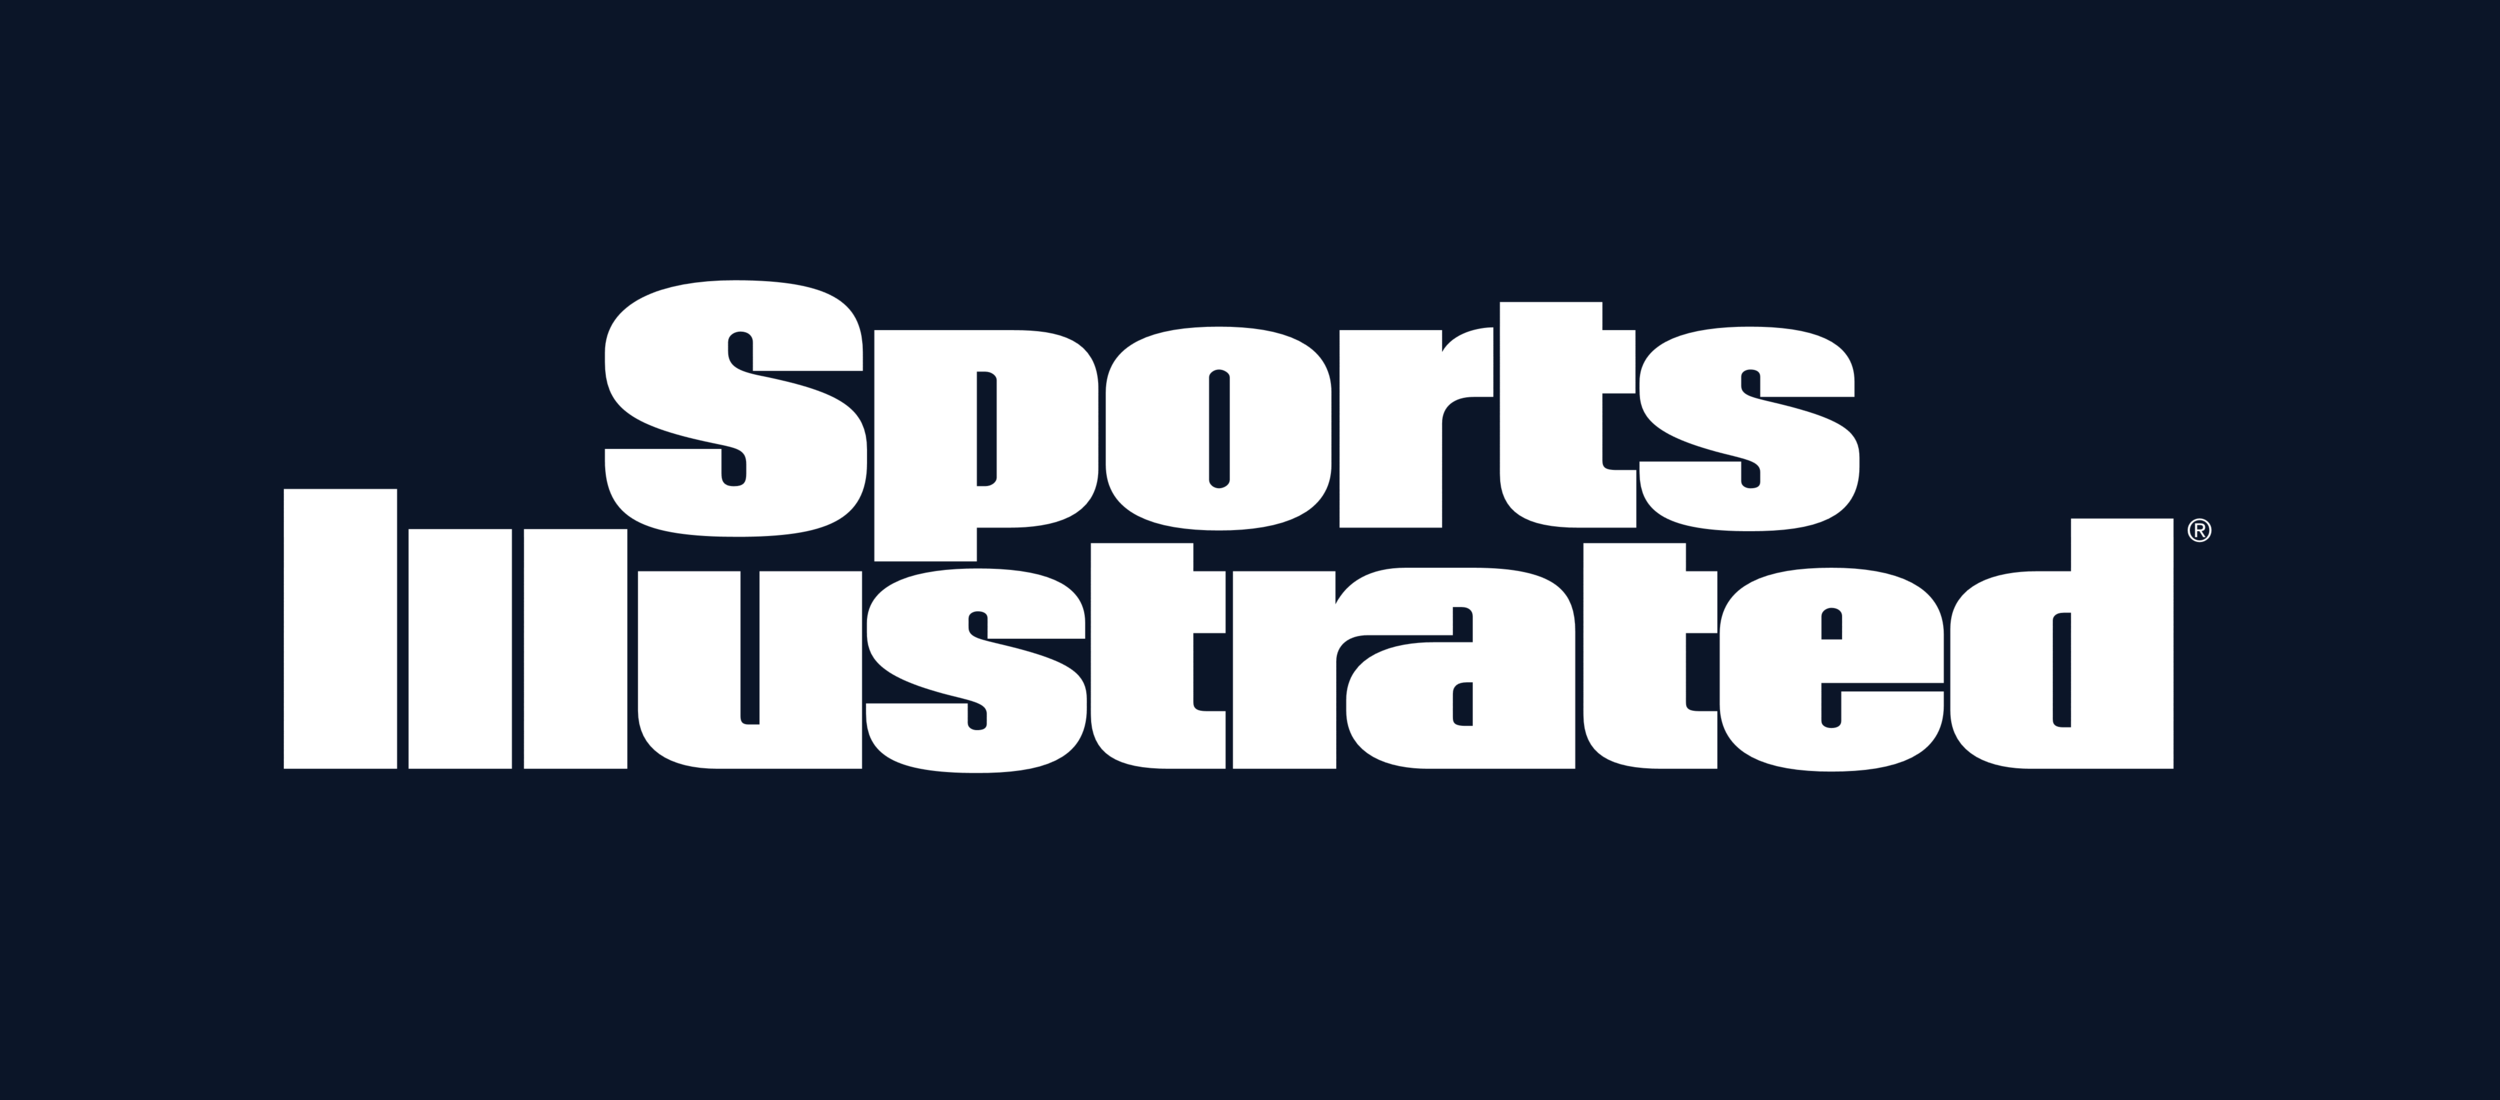 Sports_Illustrated_logo_symbol.png